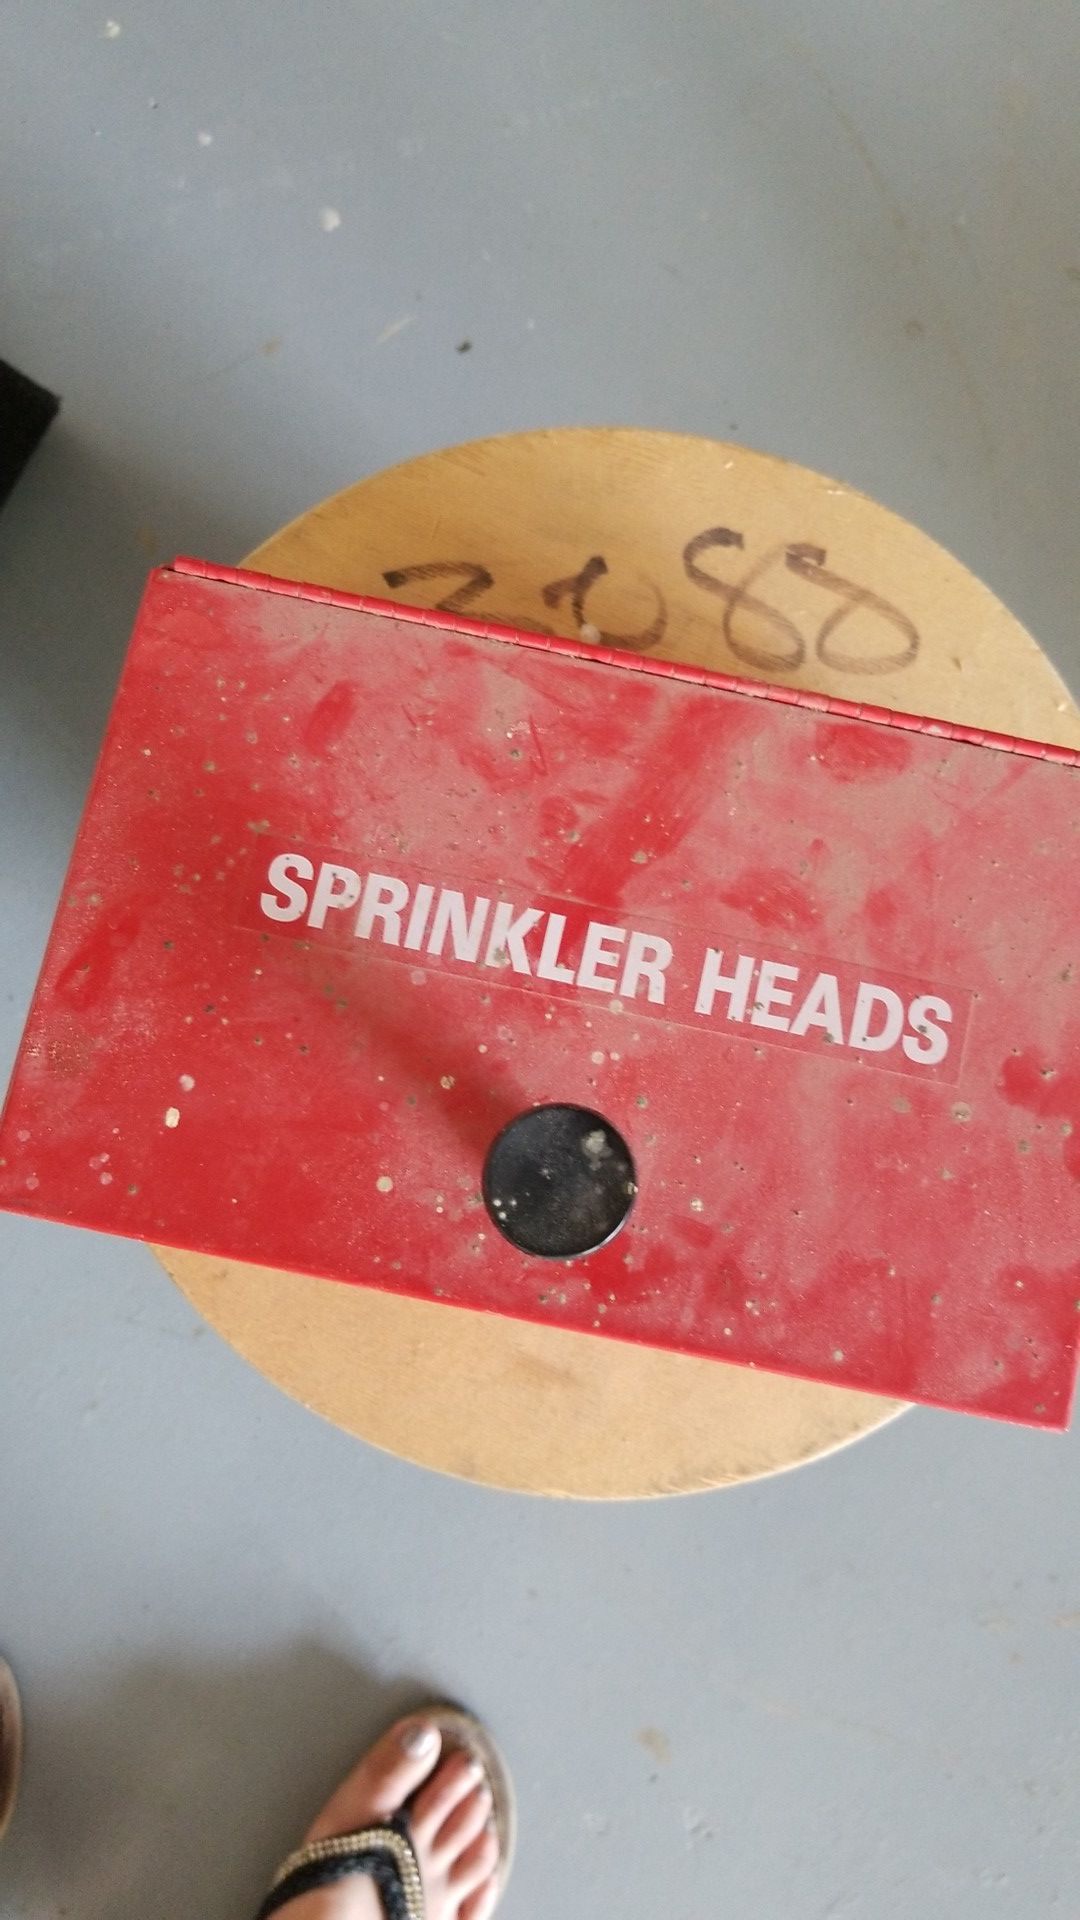 Sprinkler heads